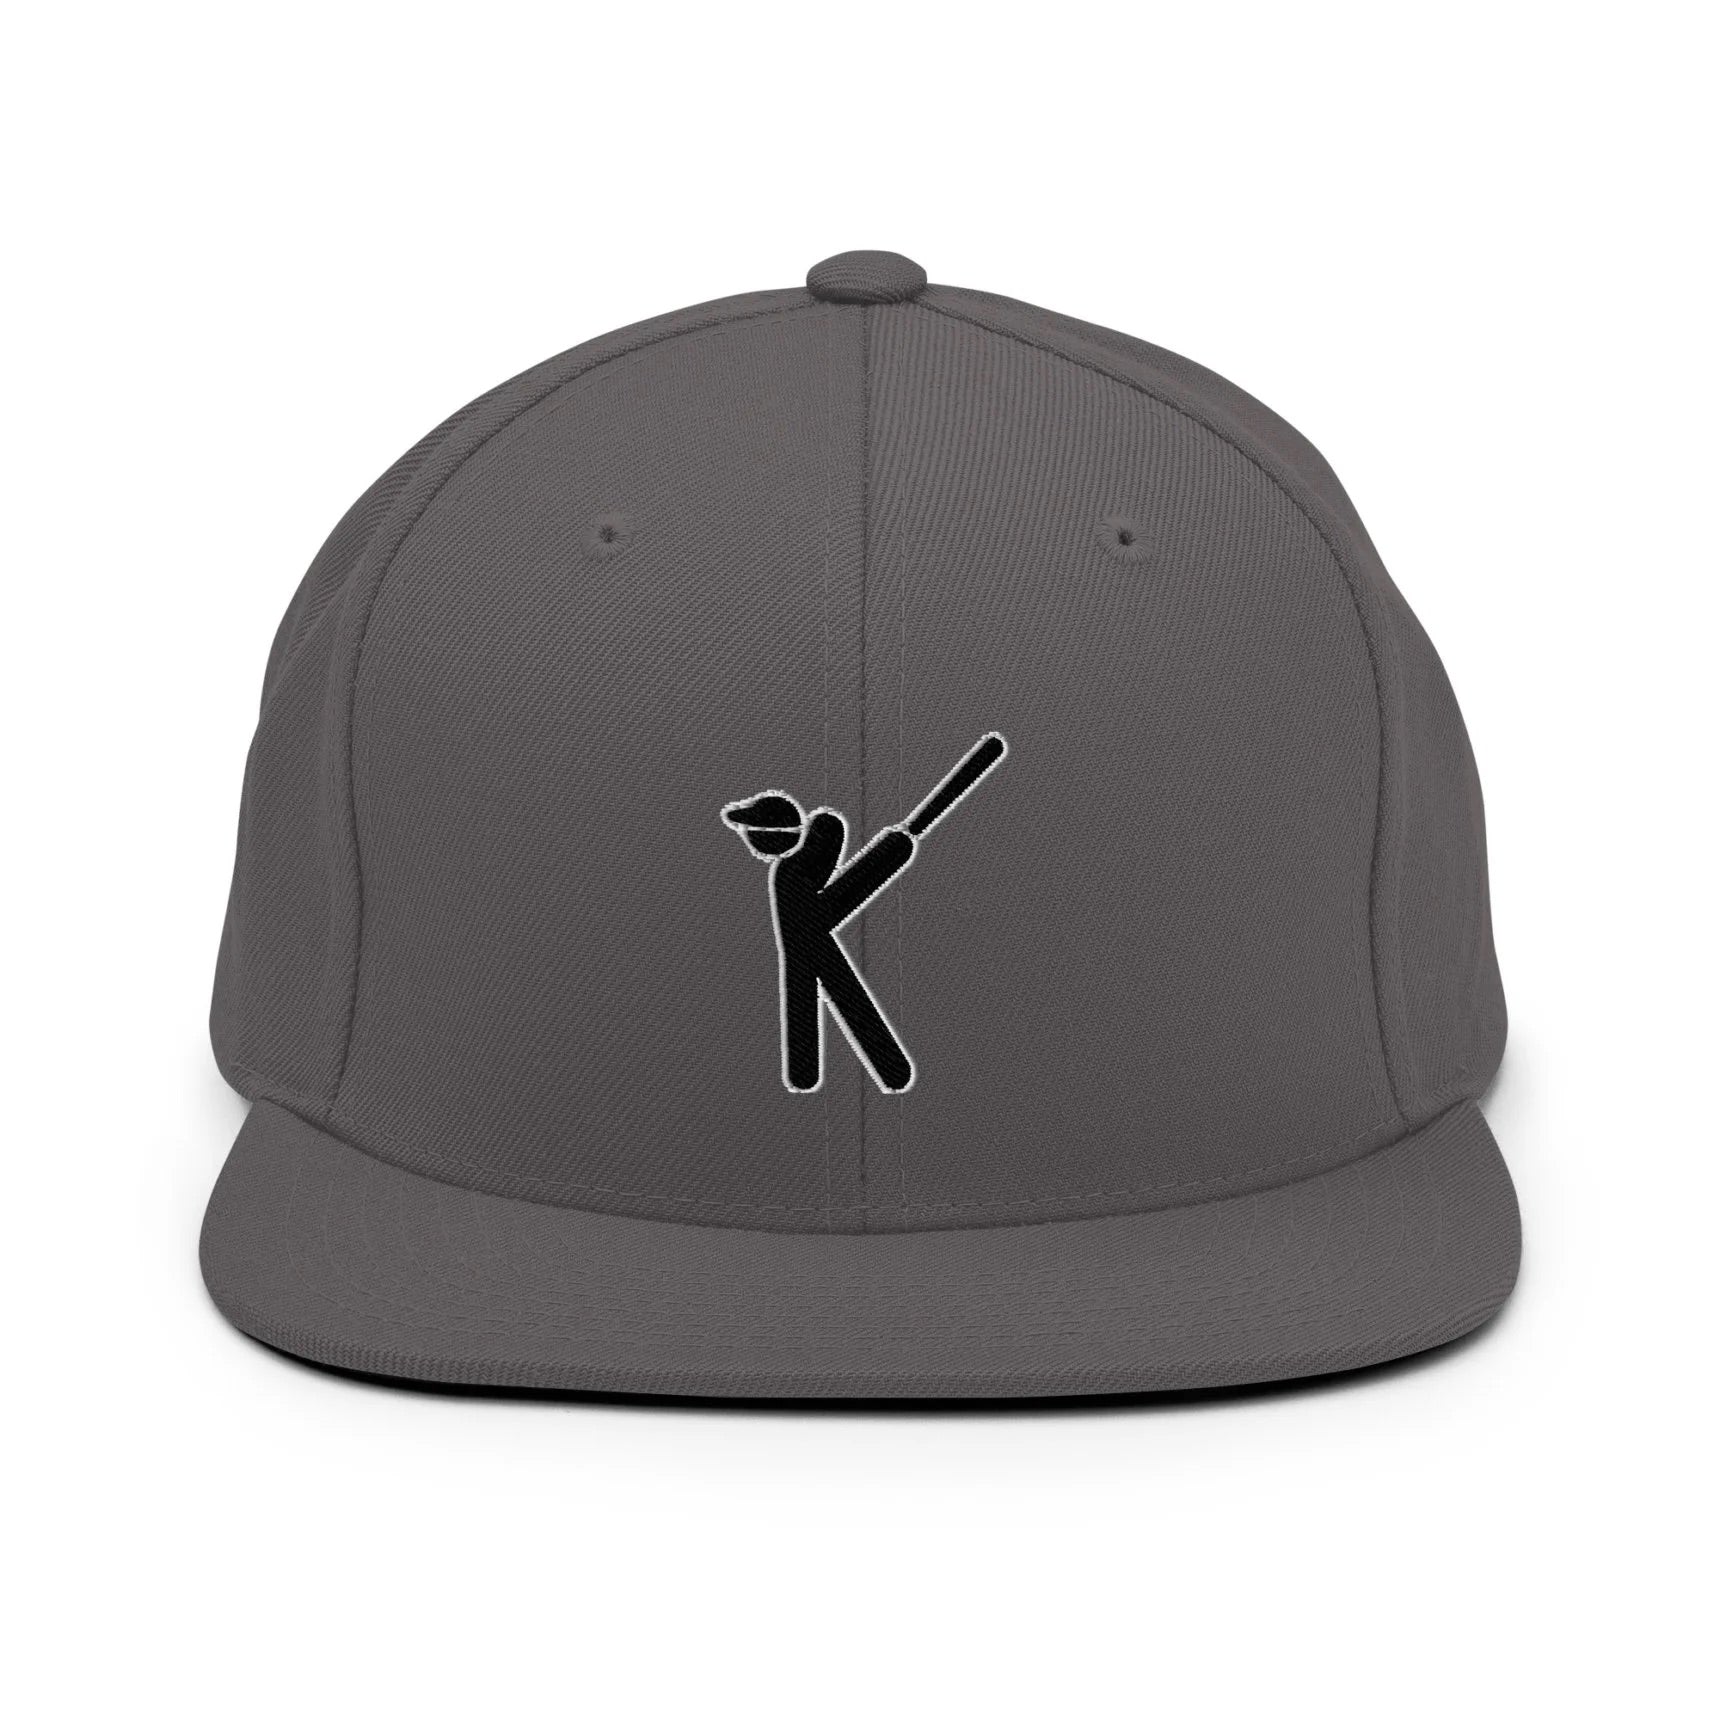 Kasabe ShowZone snapback hat in dark grey